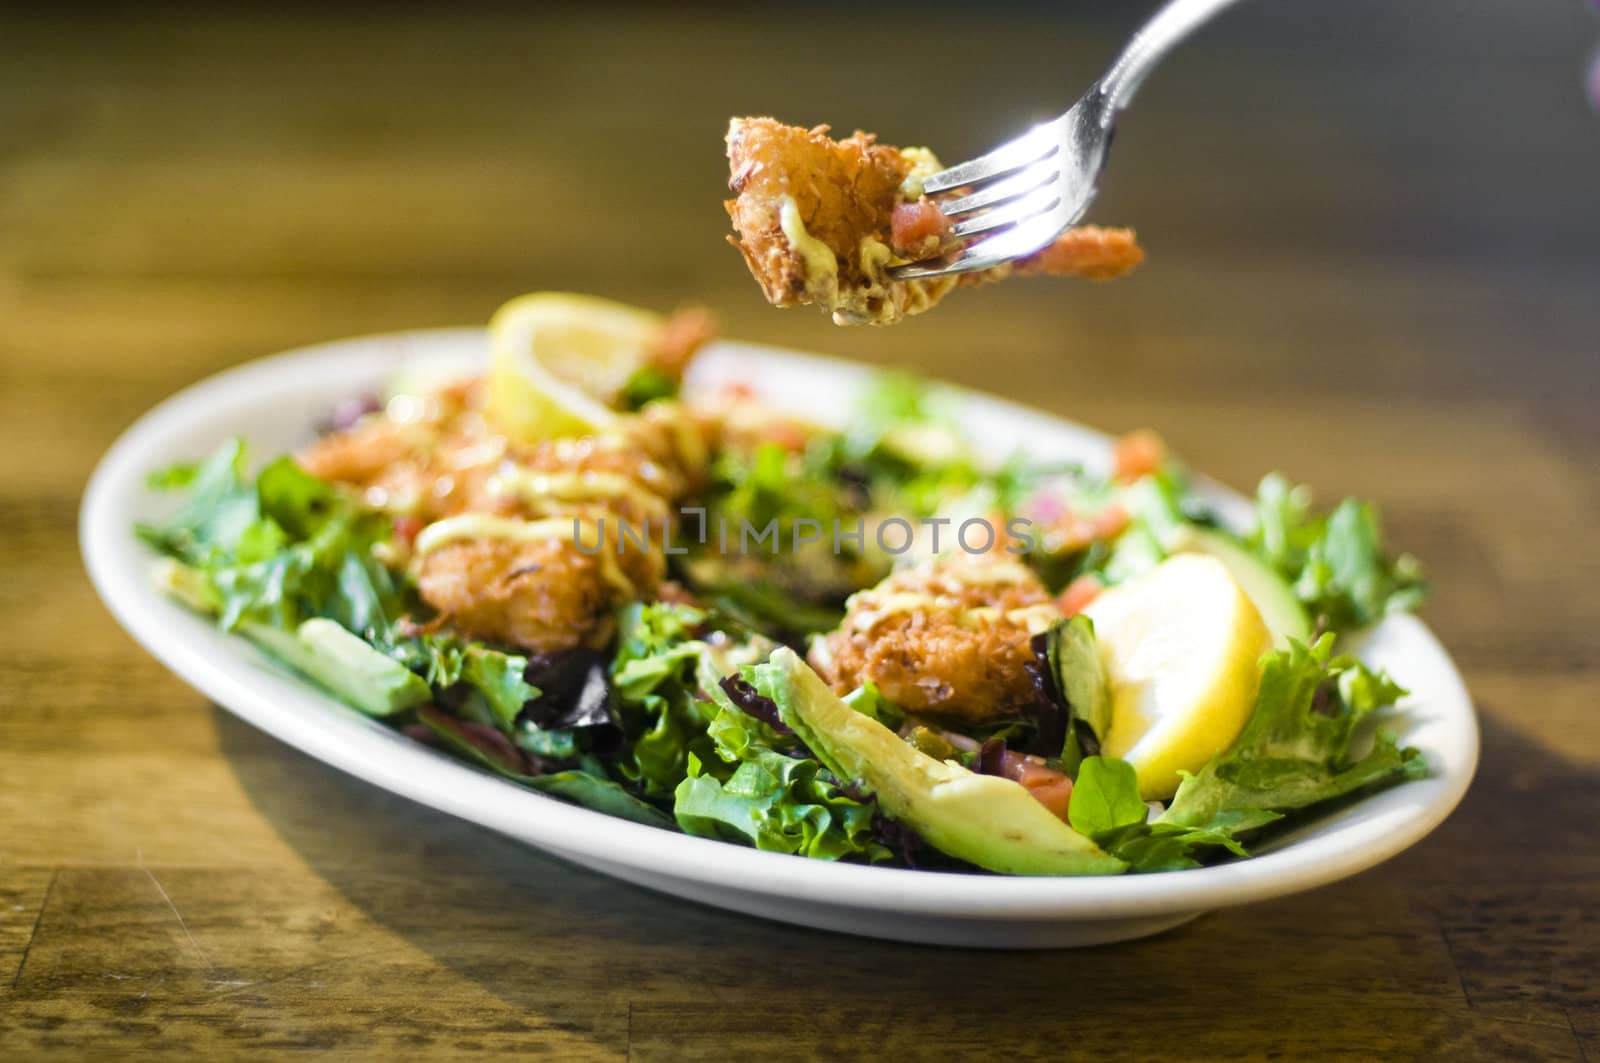 Avocado chicken salad served on a plate